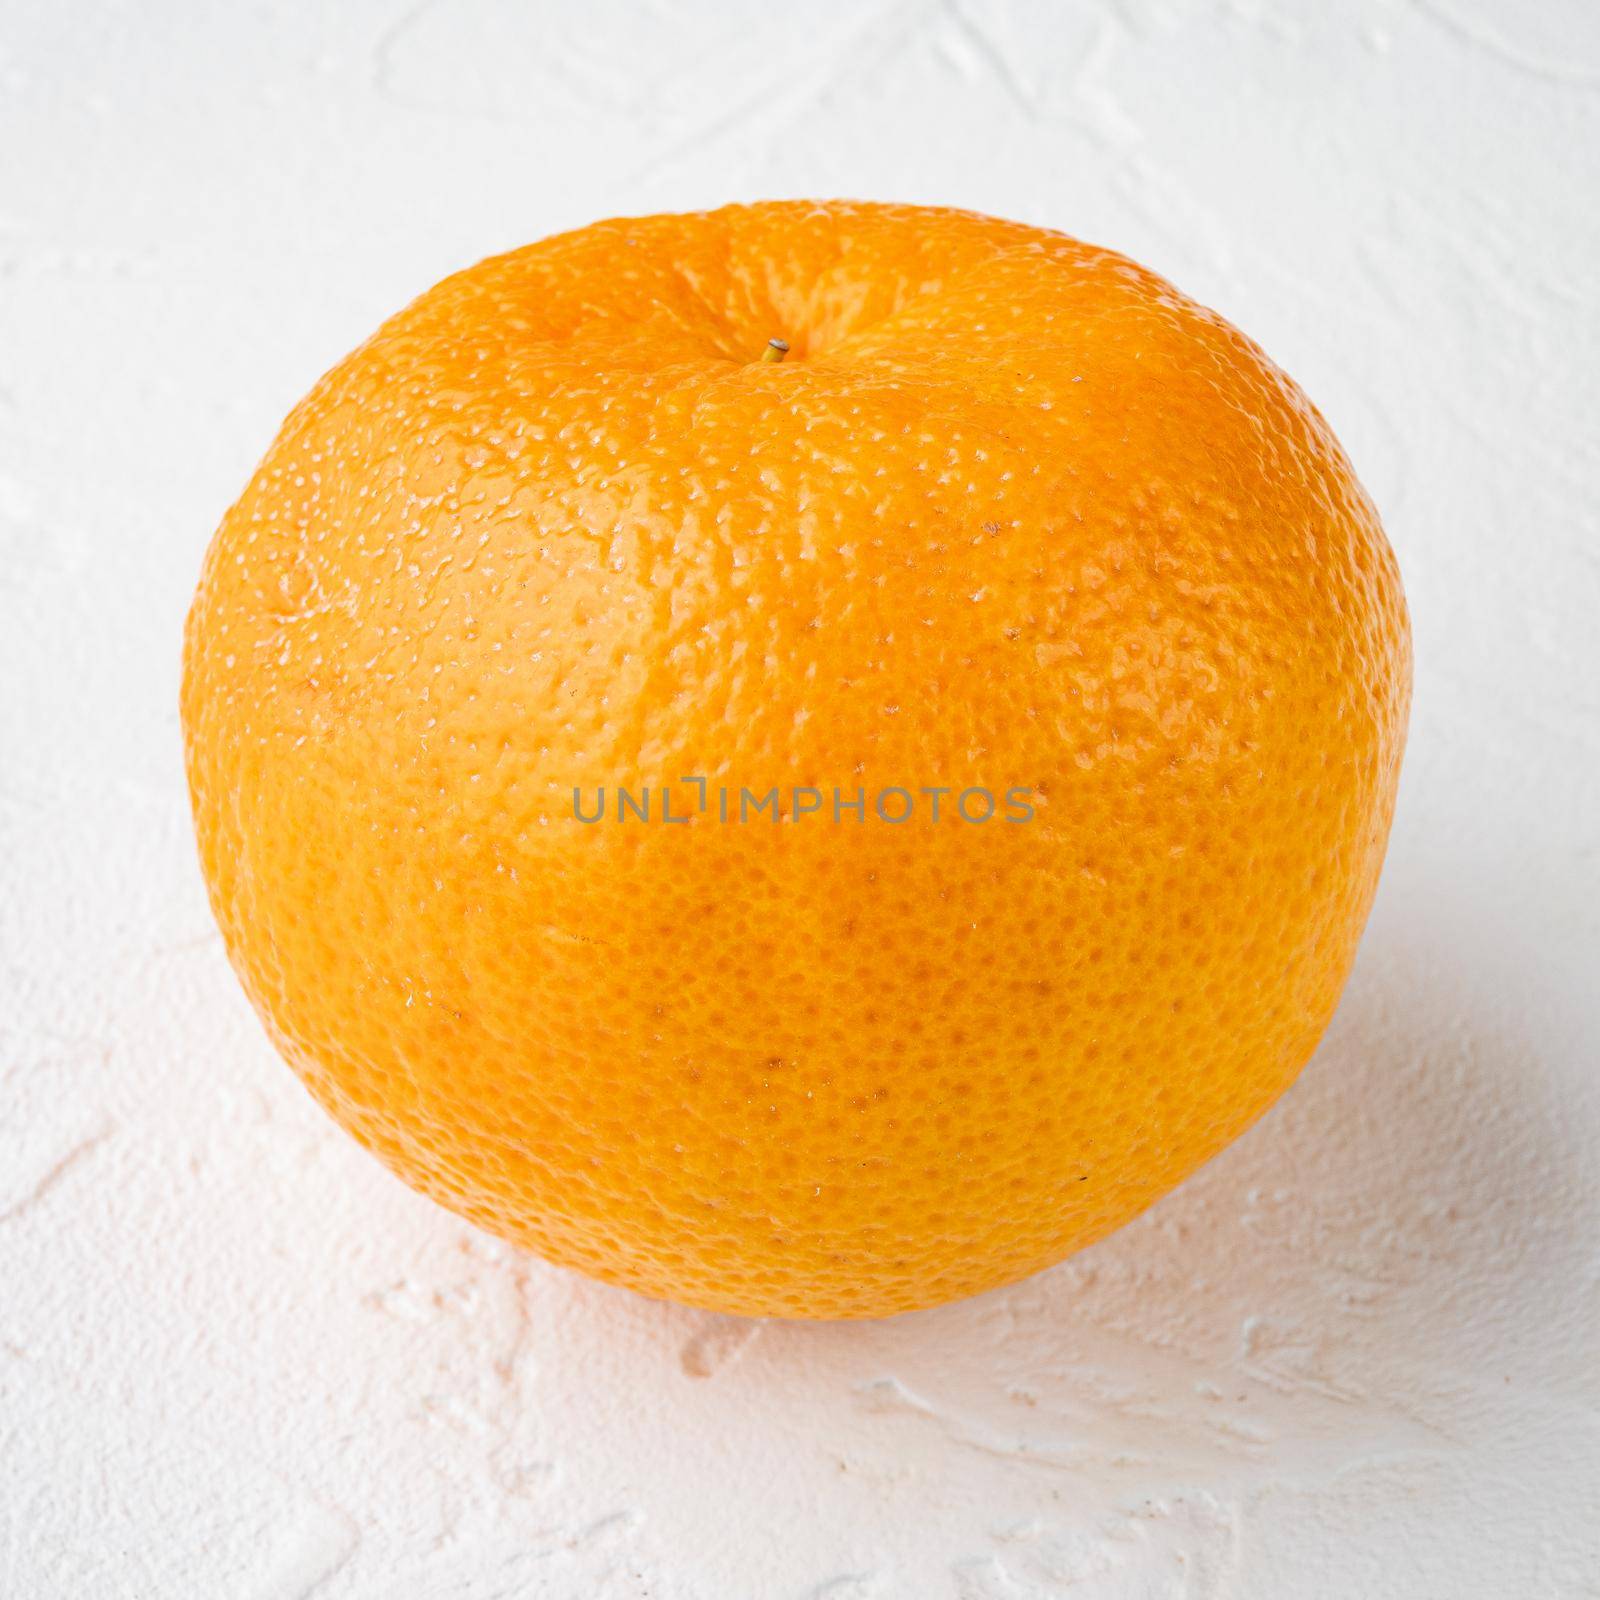 Tangerine whole set, on white stone table background, square format